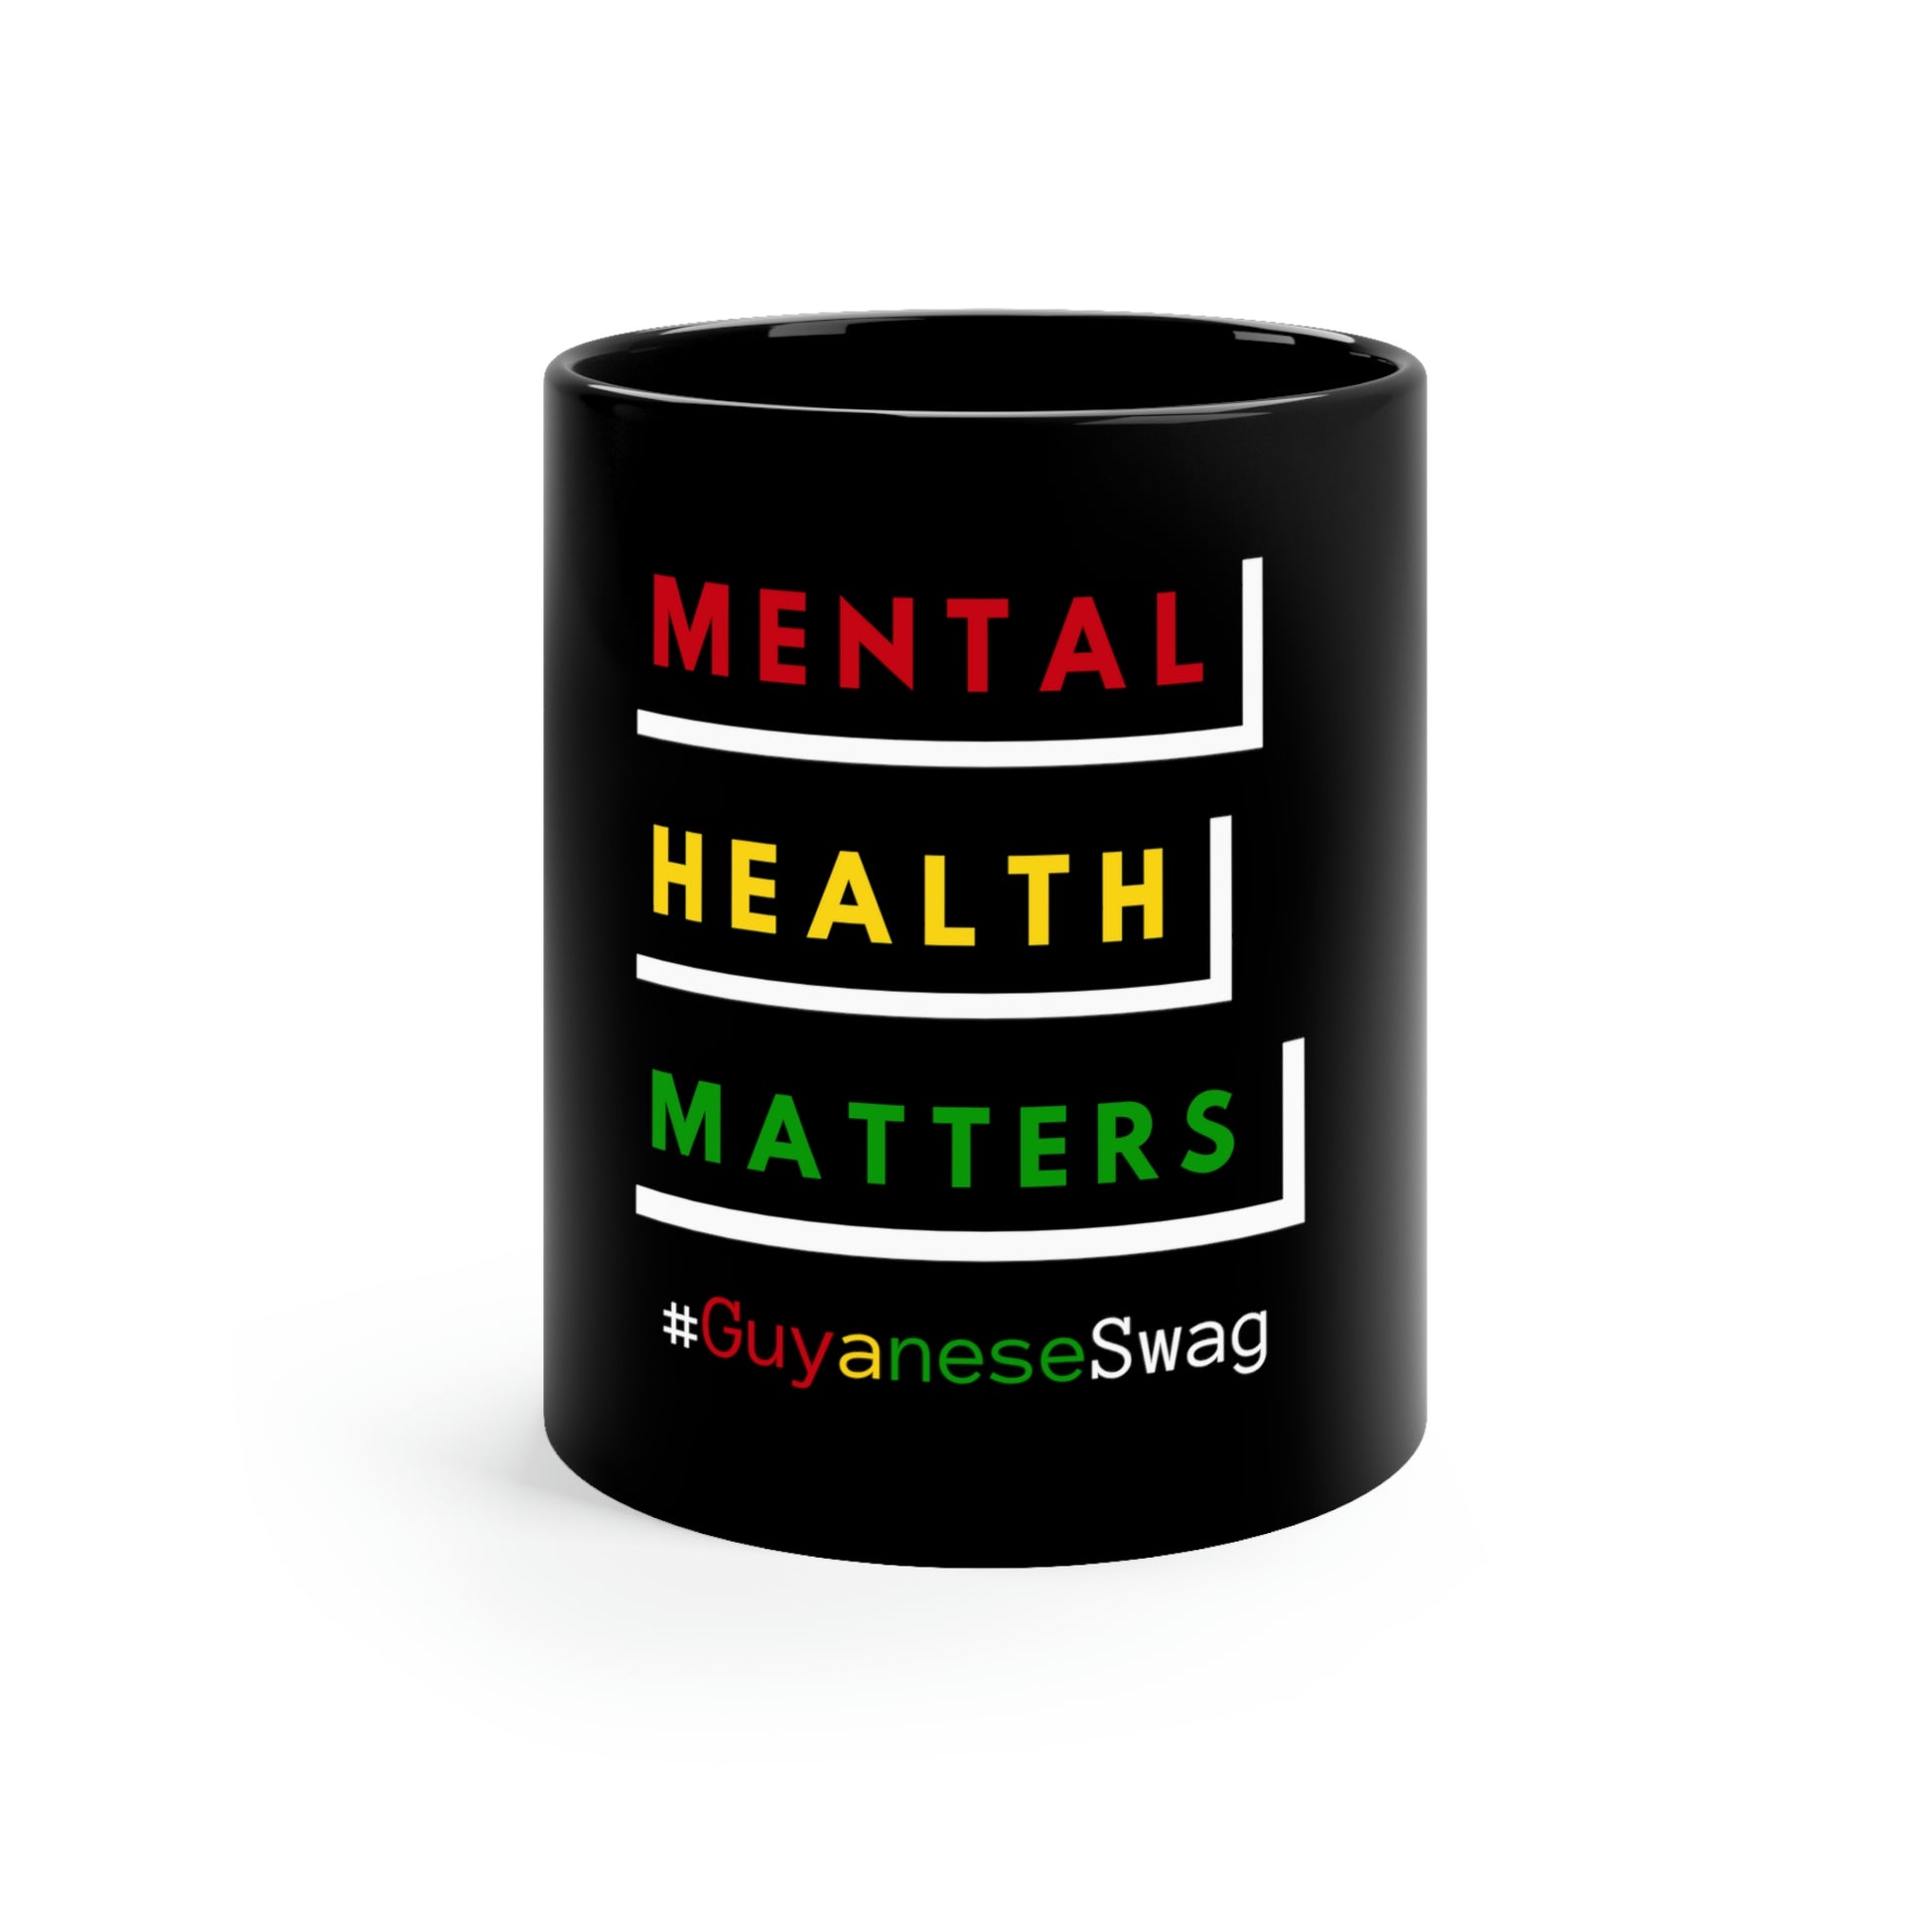 11oz "Mental Health Matters" Black Mug by Guyanese Swag.